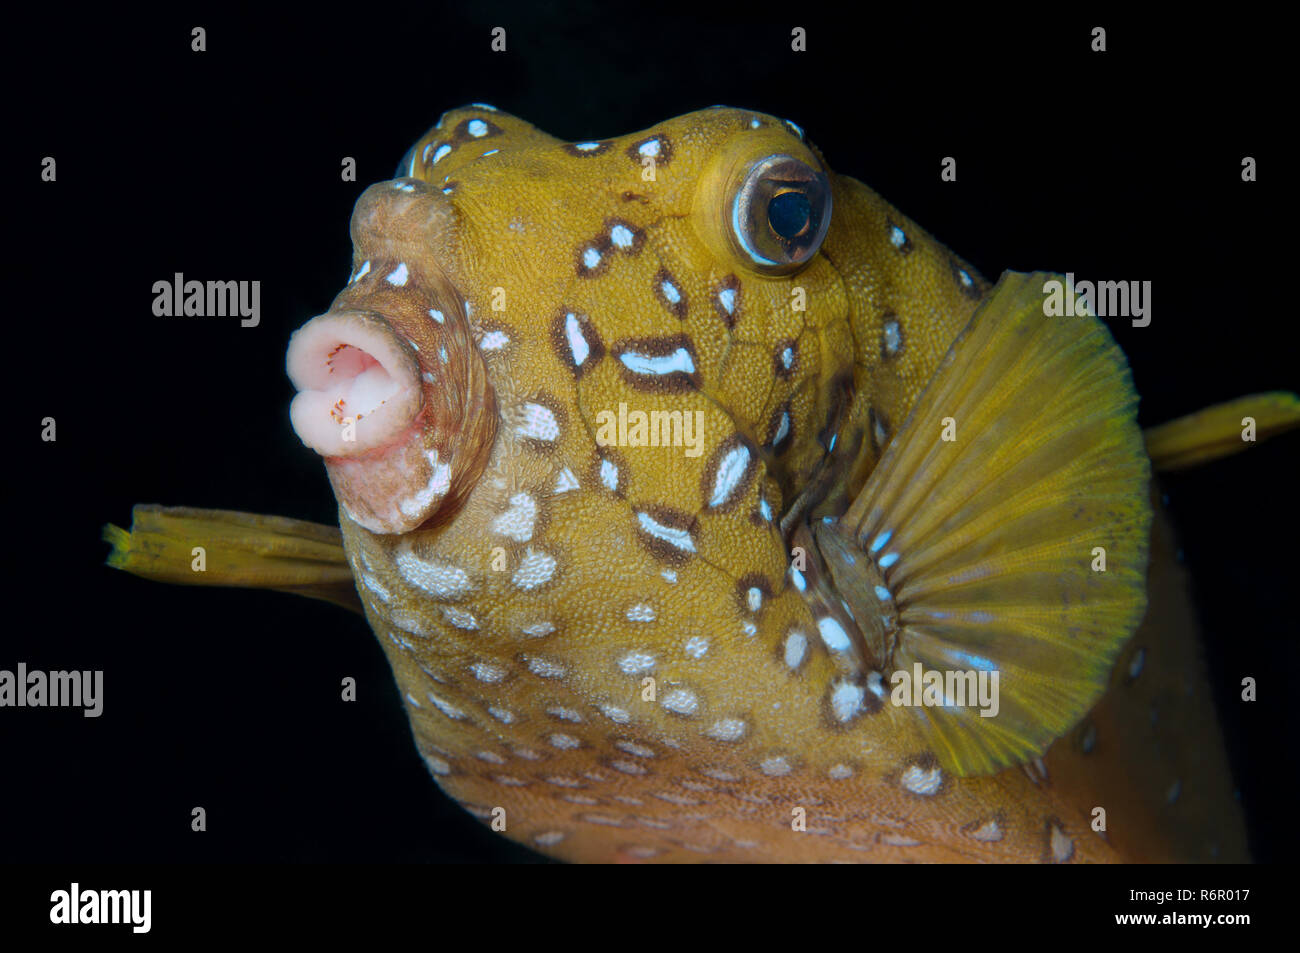 Black-spotted boxfish, Blue-spotted boxfish, Yellow boxfish, Cofferfish, Cowfish or Cubical boxfish (Ostracion cubicus) Night diving, Red sea, Egypt,  Stock Photo